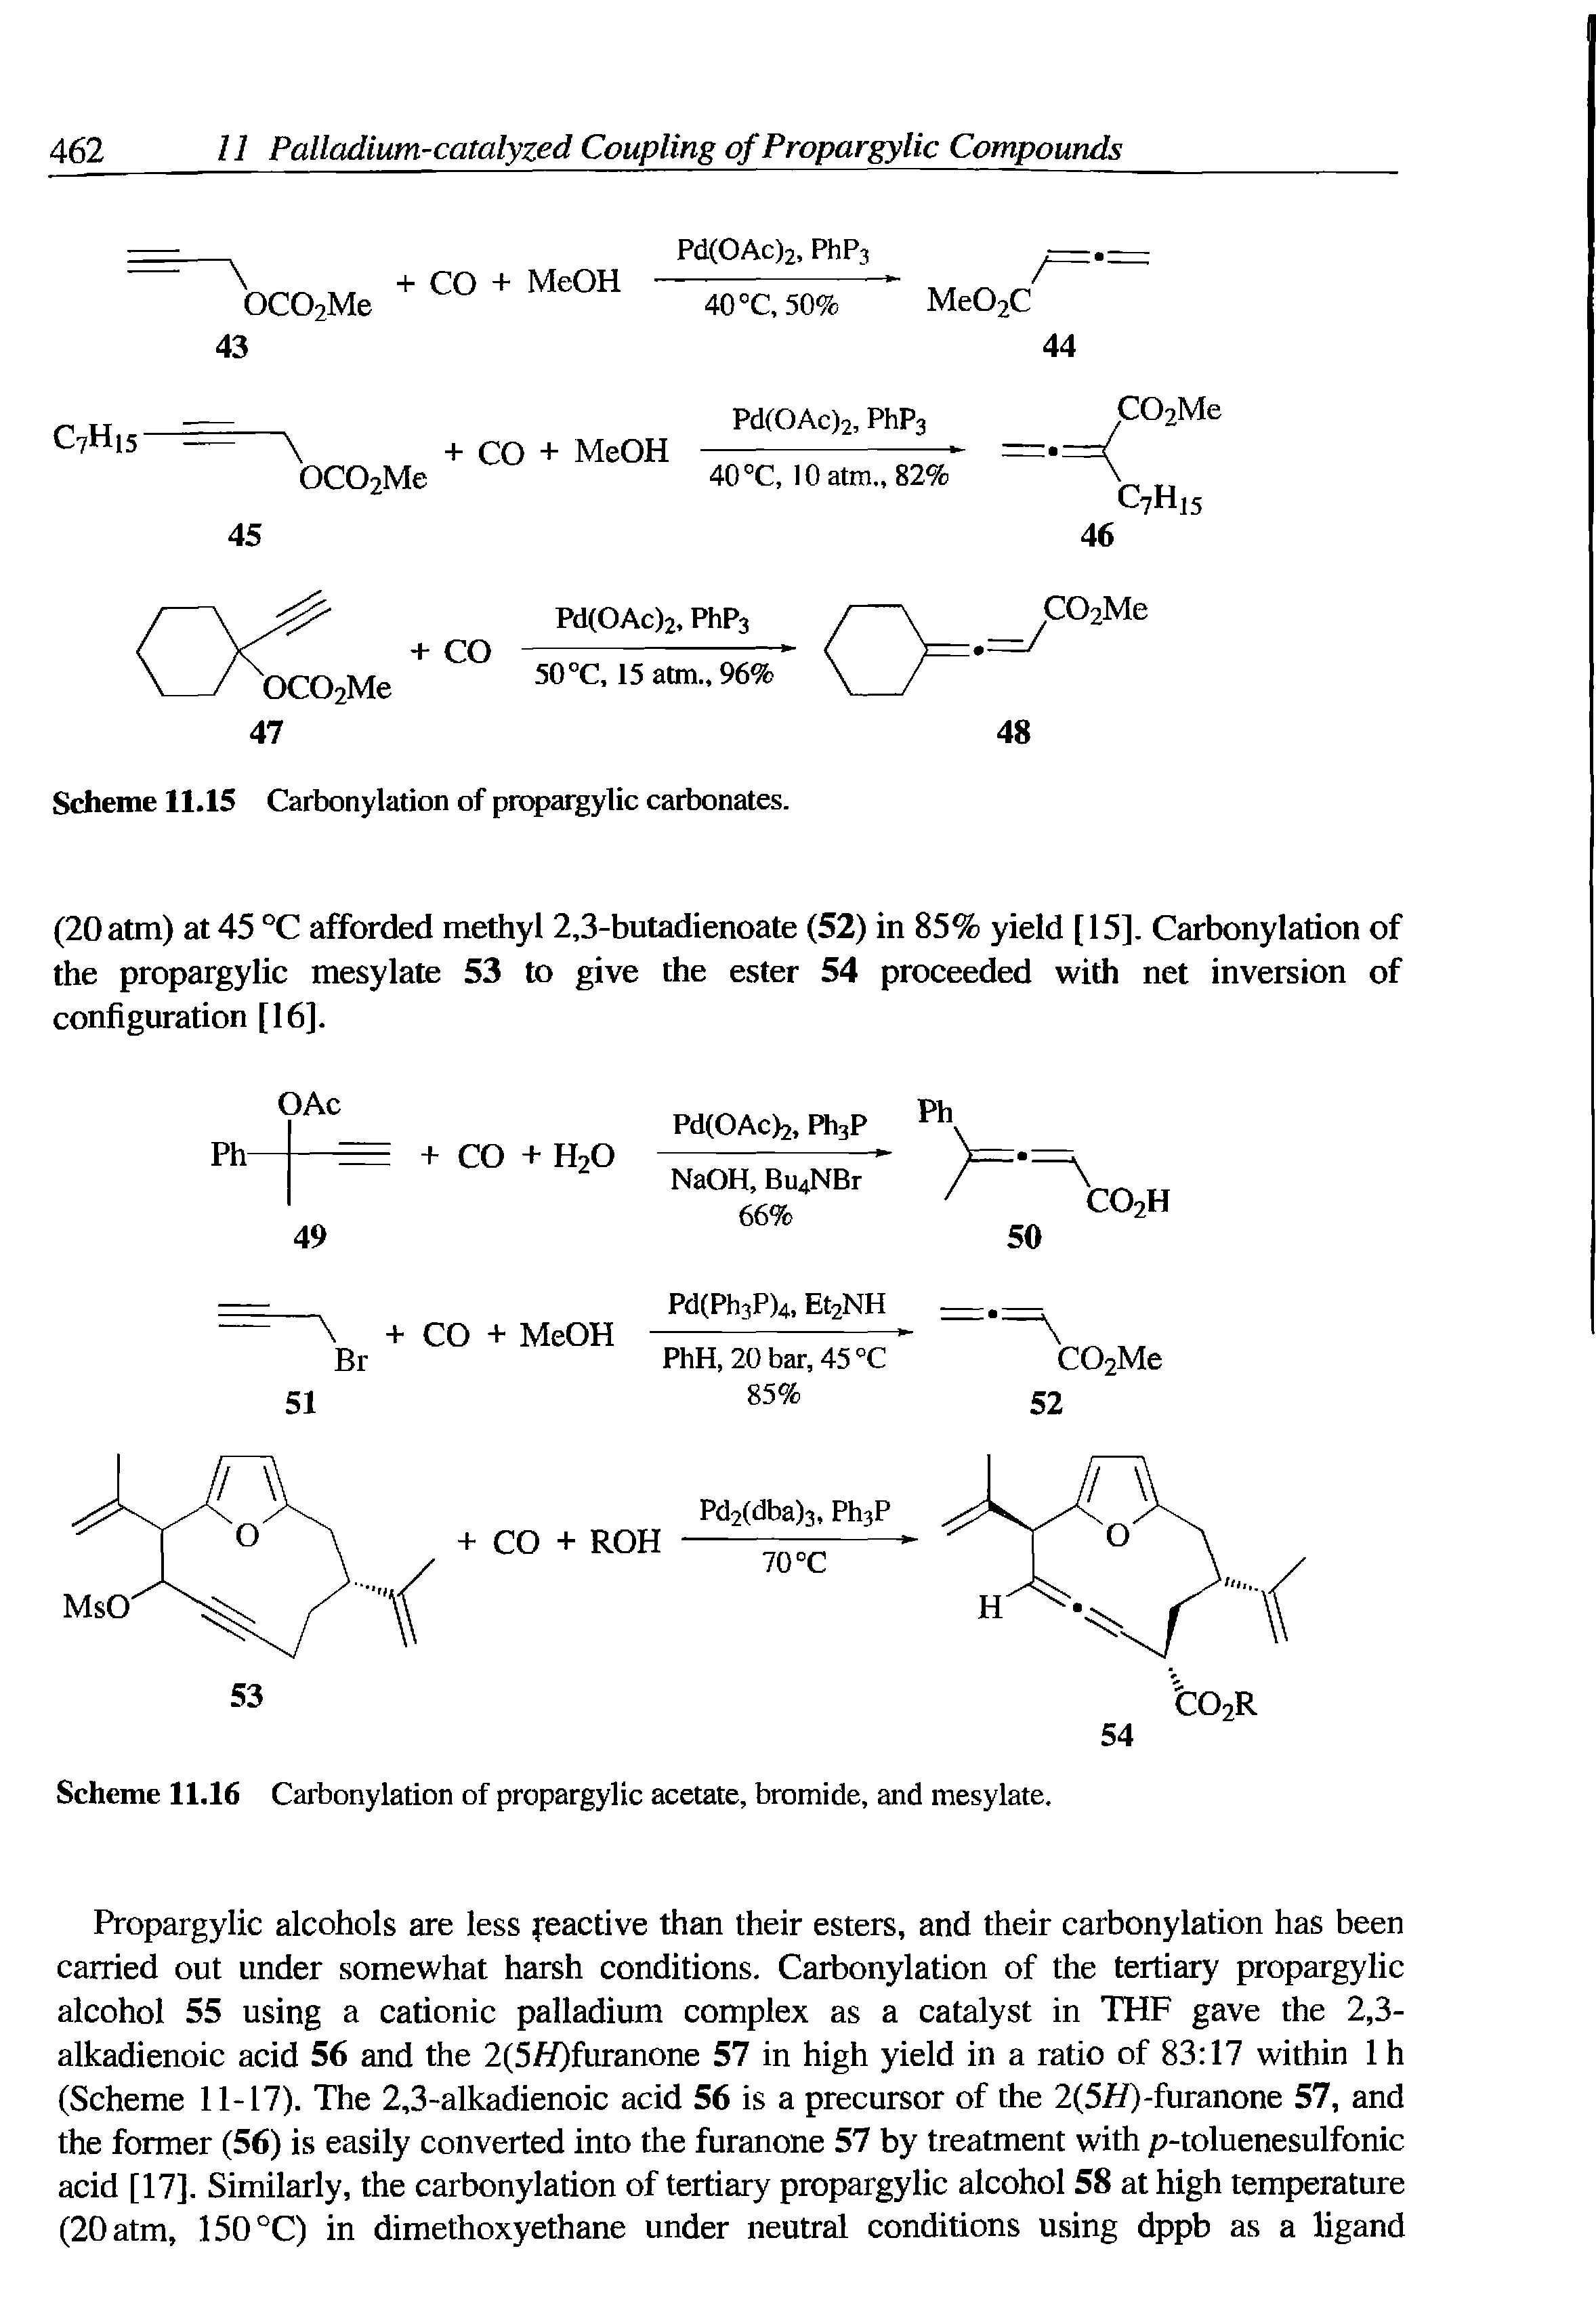 Scheme 11.16 Carbonylation of propargylic acetate, bromide, and mesylate.